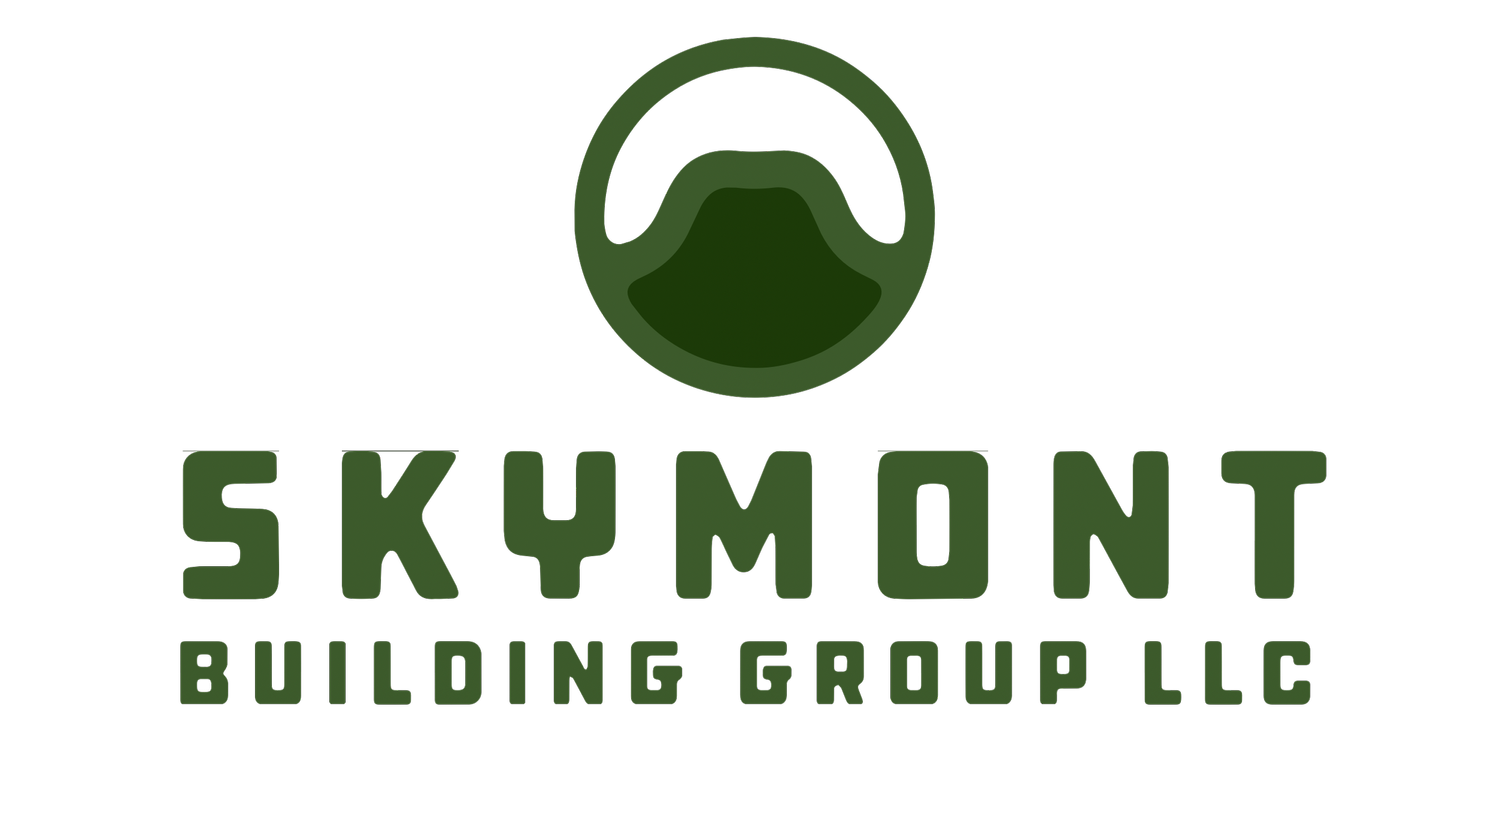 Skymont Building Group LLC